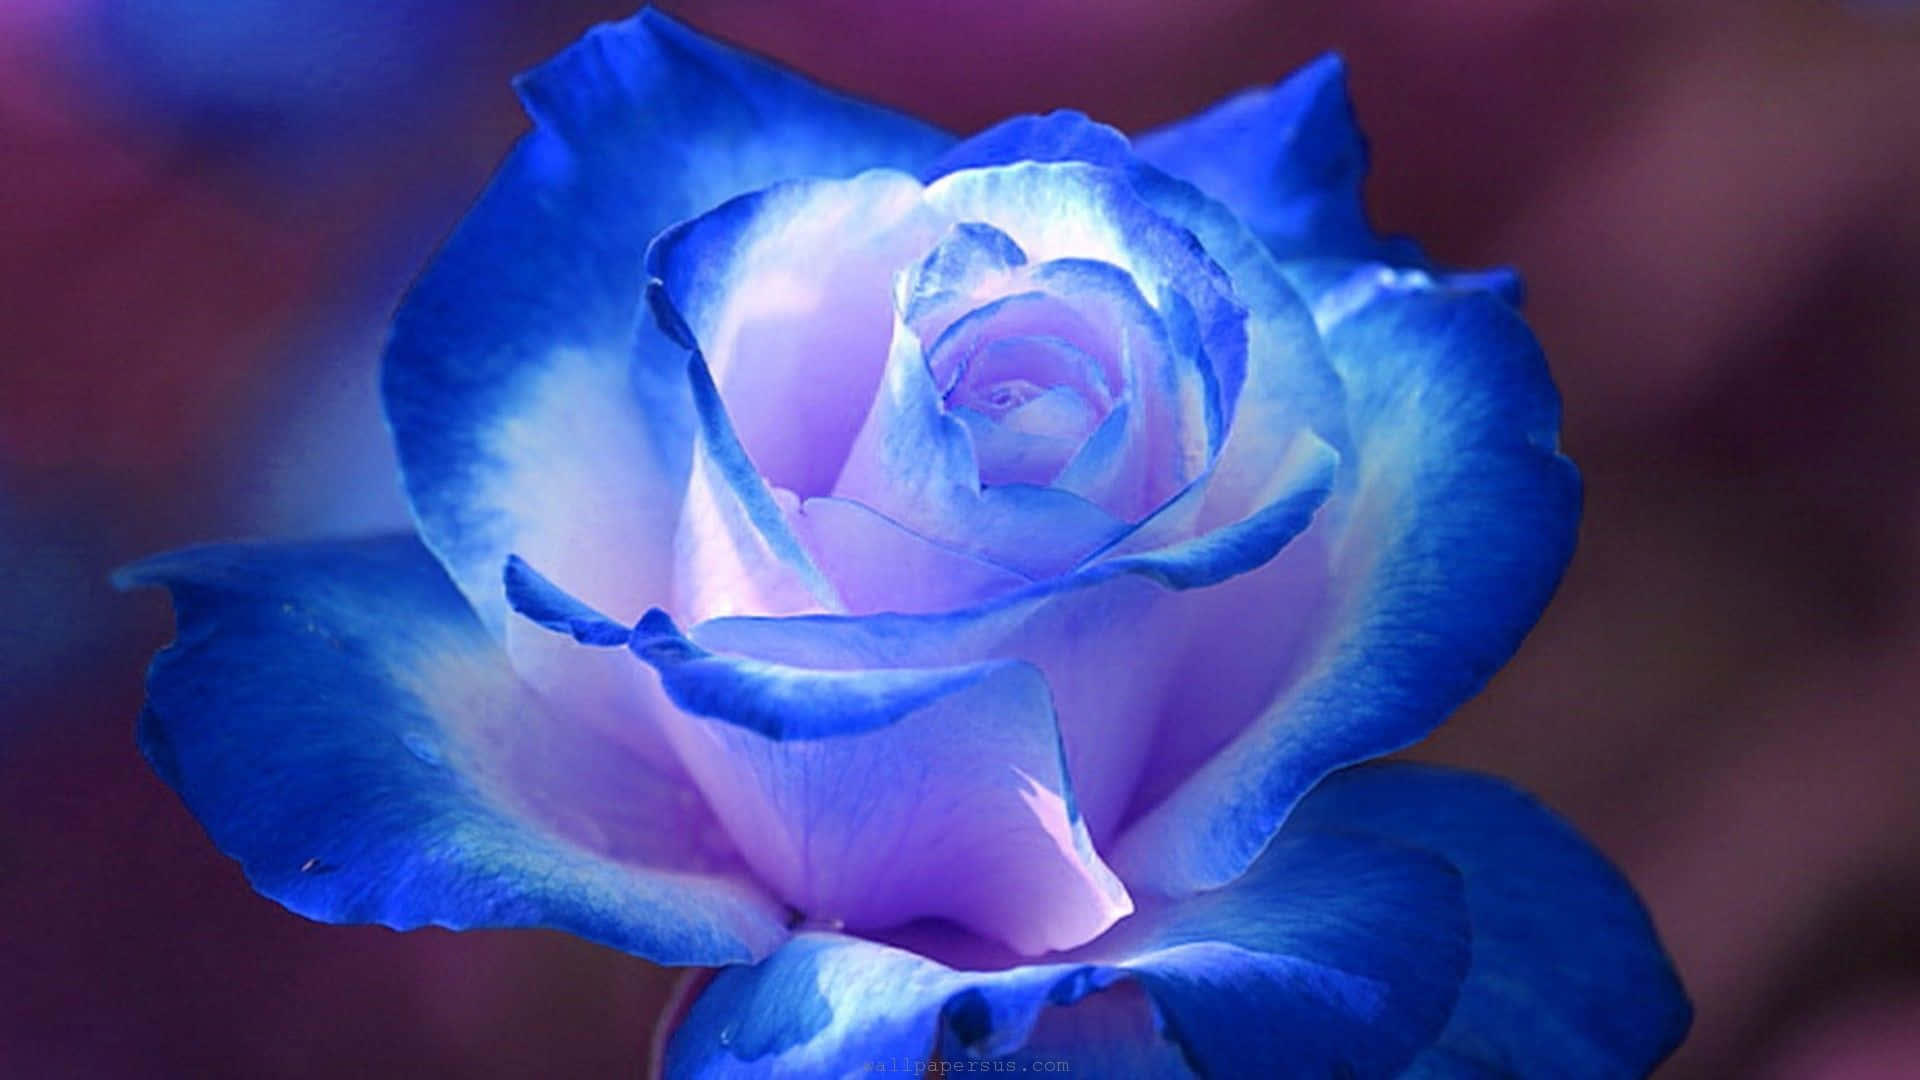 Caption: Majestic Blue Rose in Full Bloom